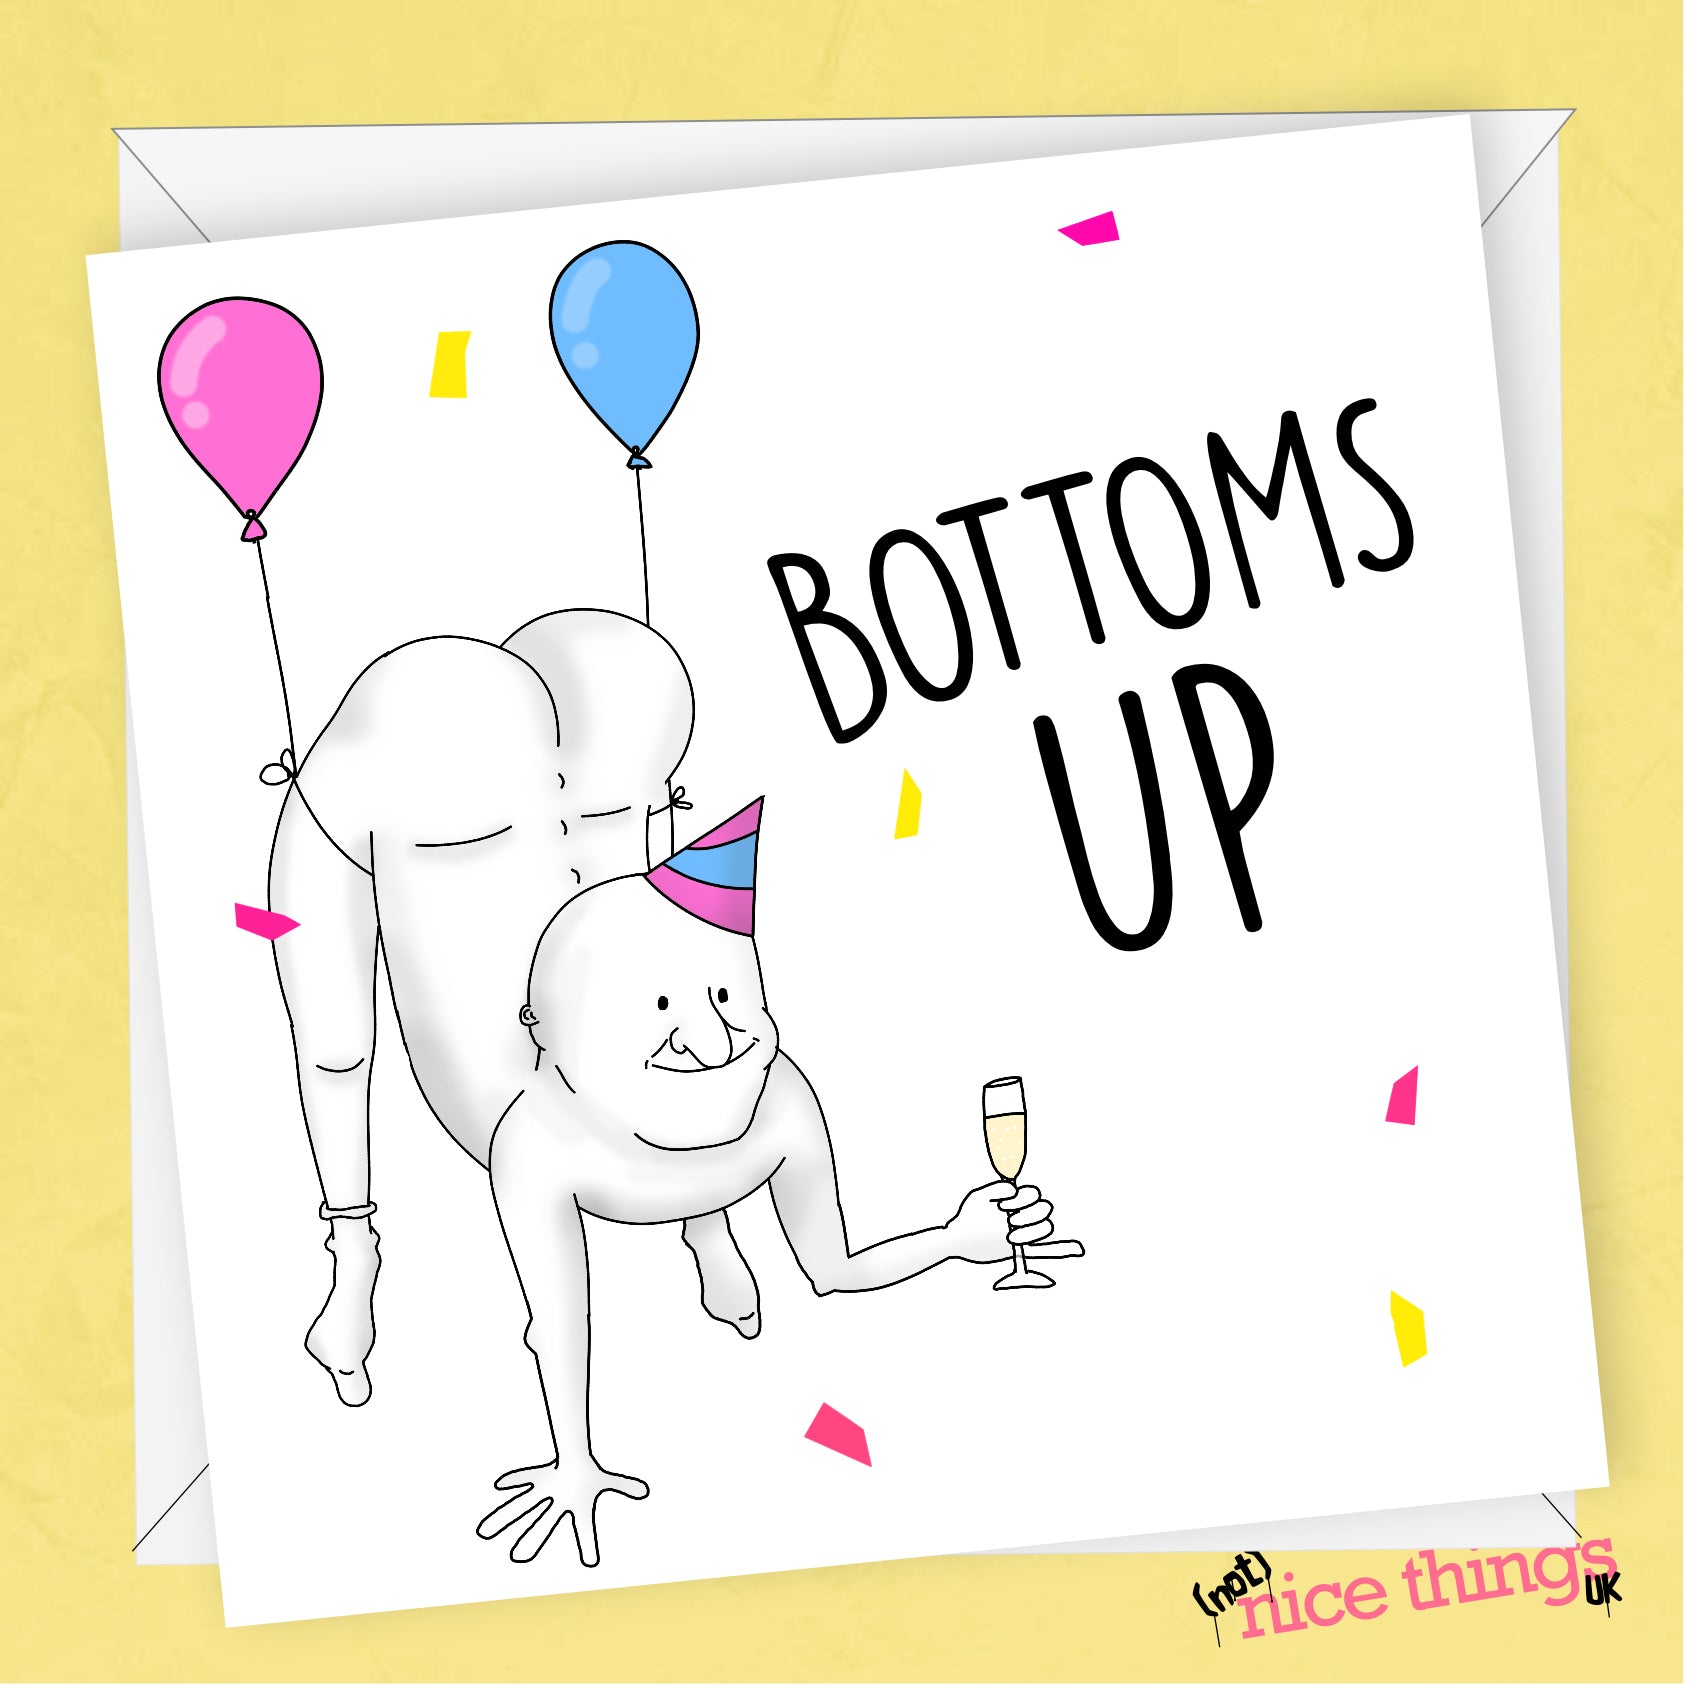 Bottoms Up! Funny Birthday Card for Him, for Her, Cheeky, Rude Birthday Card, Dad, Boyfriend, Girlfriend, Best Friend, Drinking, Butt, Ass